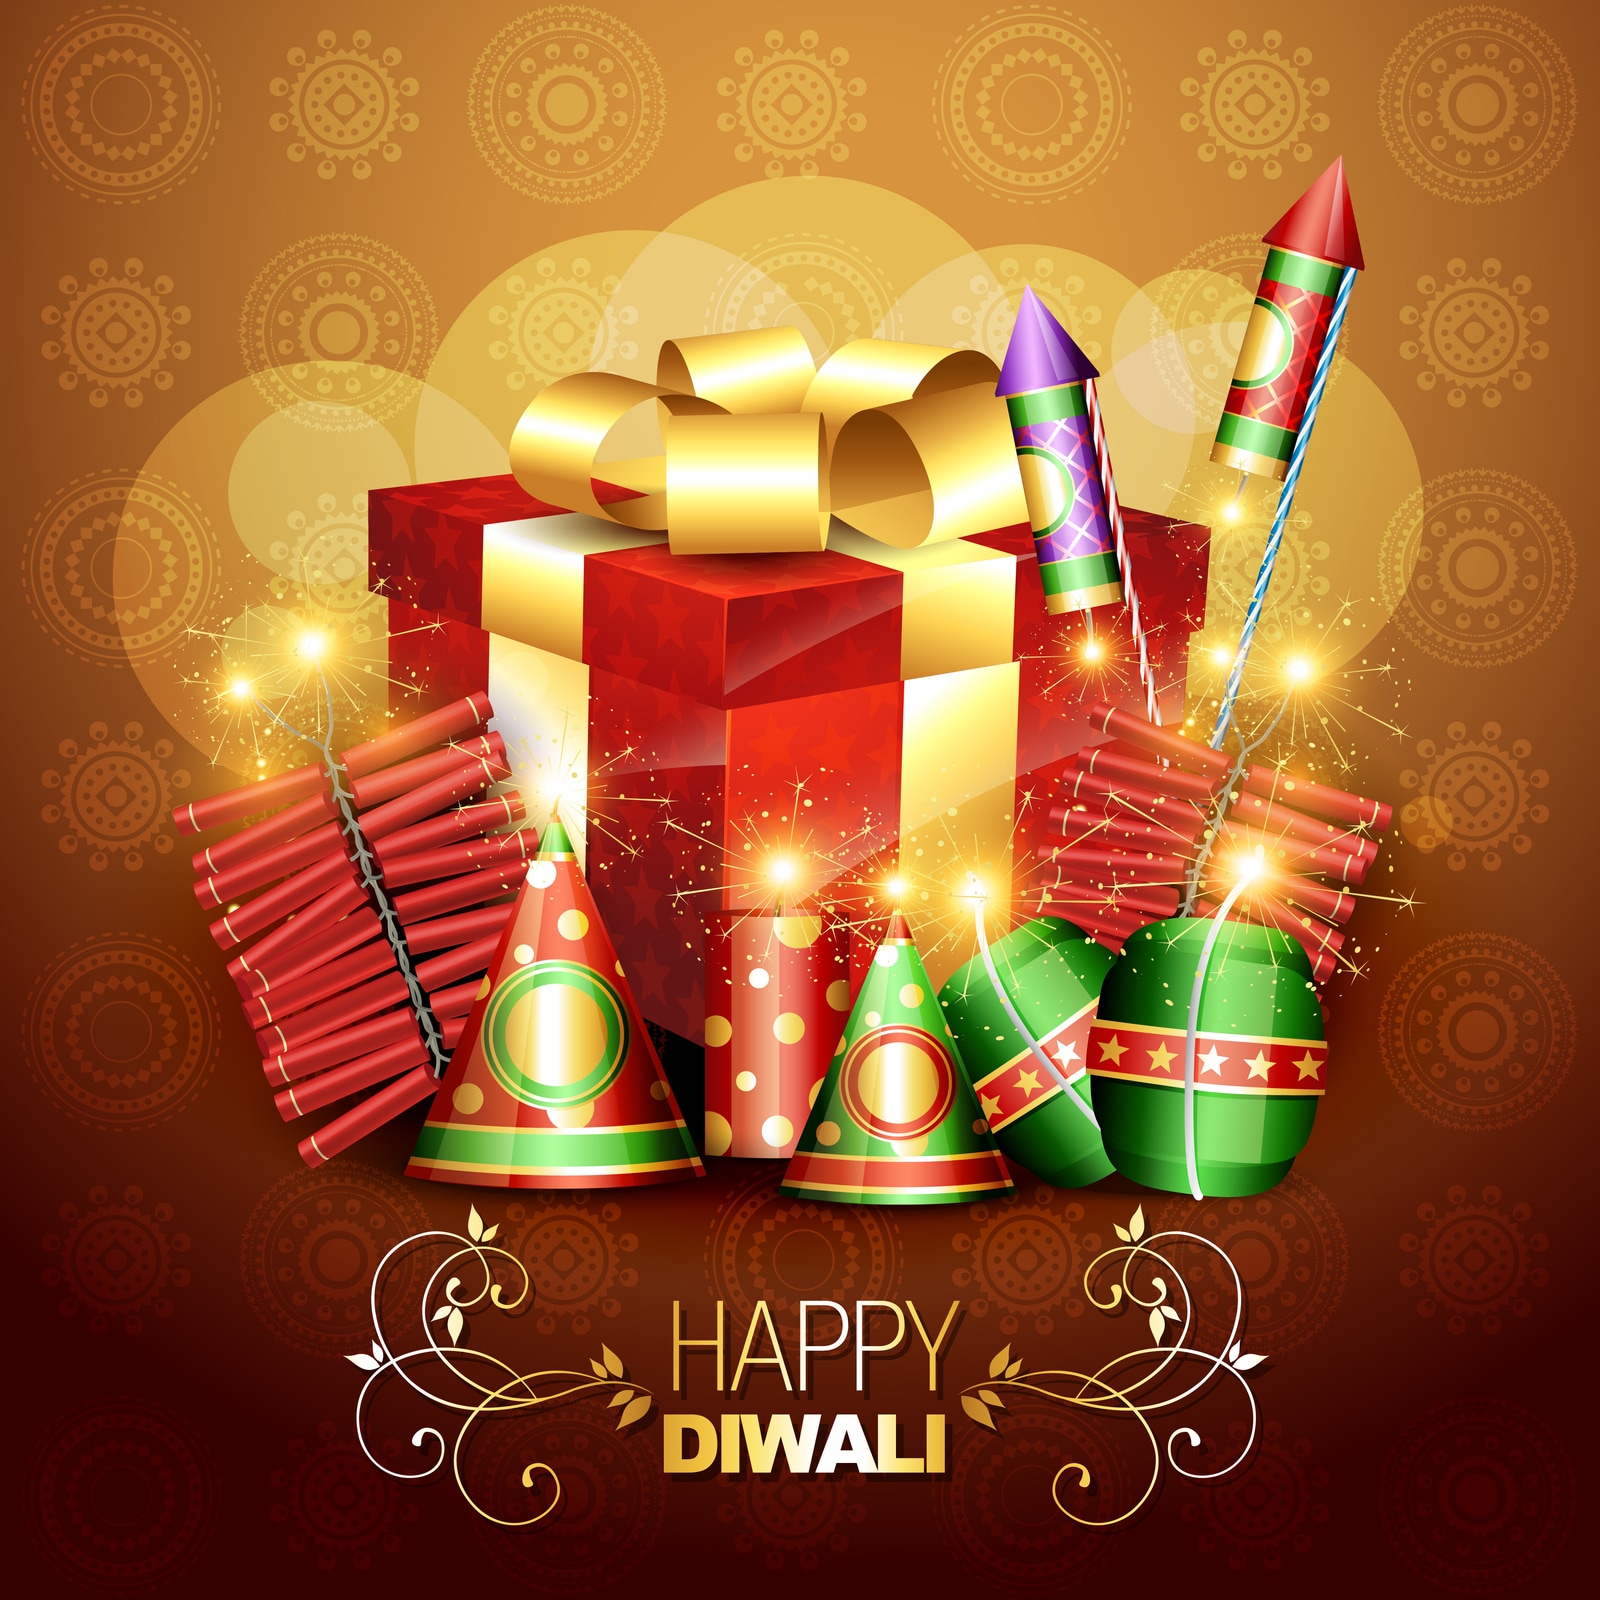 Choosing a Corporate Diwali Gift for Employees: Diwali Gift Ideas